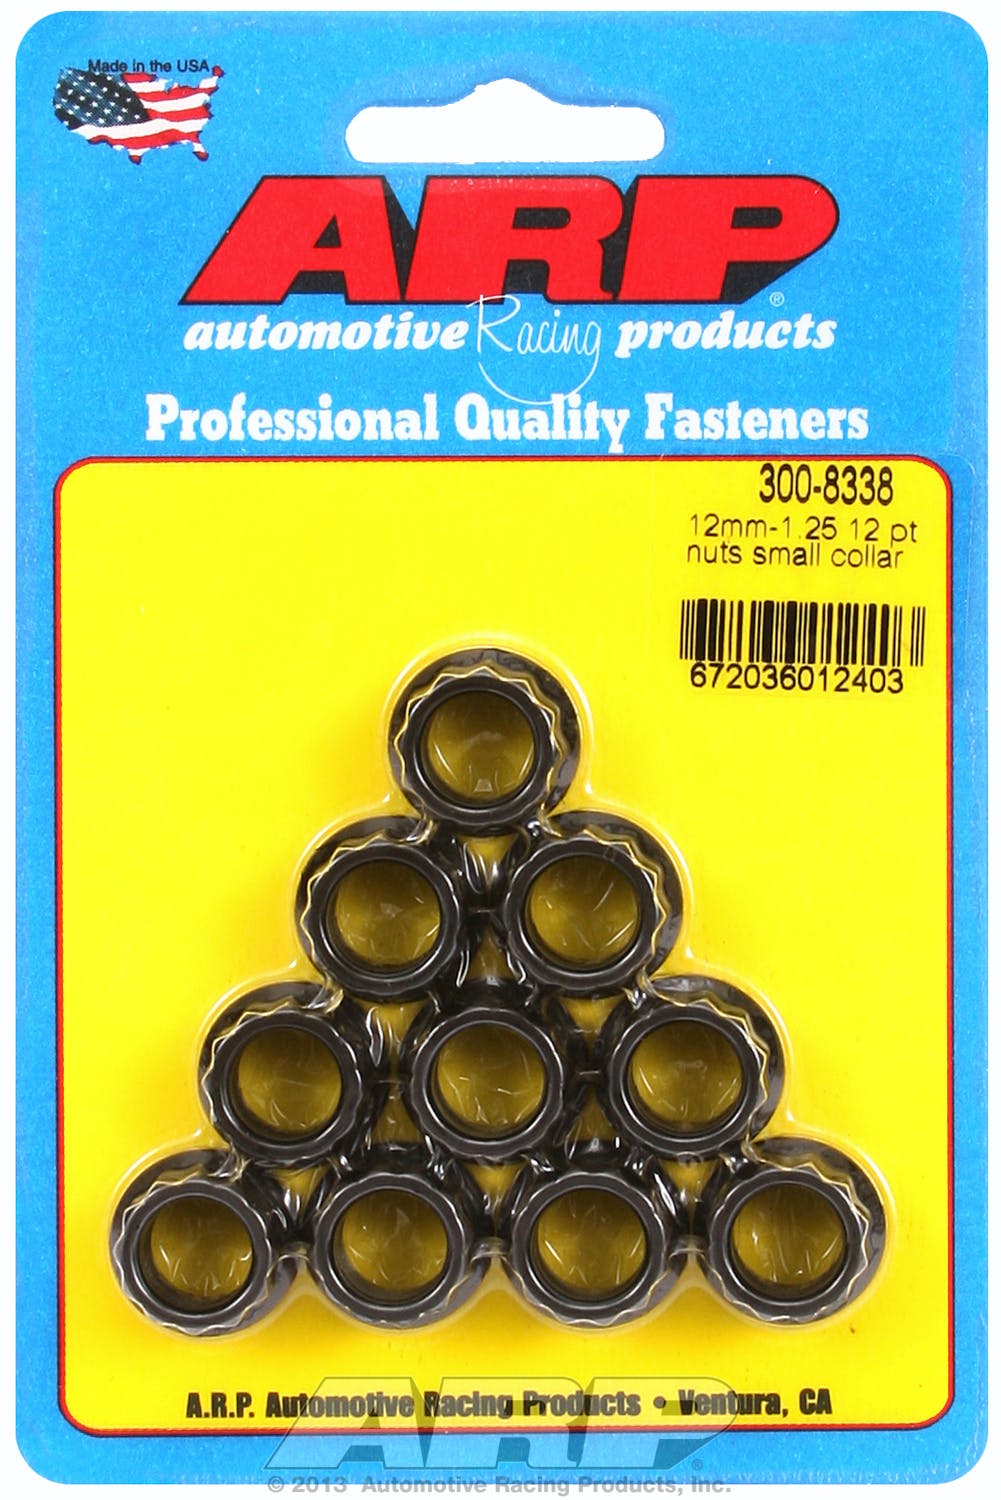 ARP 300-8338 M12 x 1.25 12pt Nut Kit (small collar)